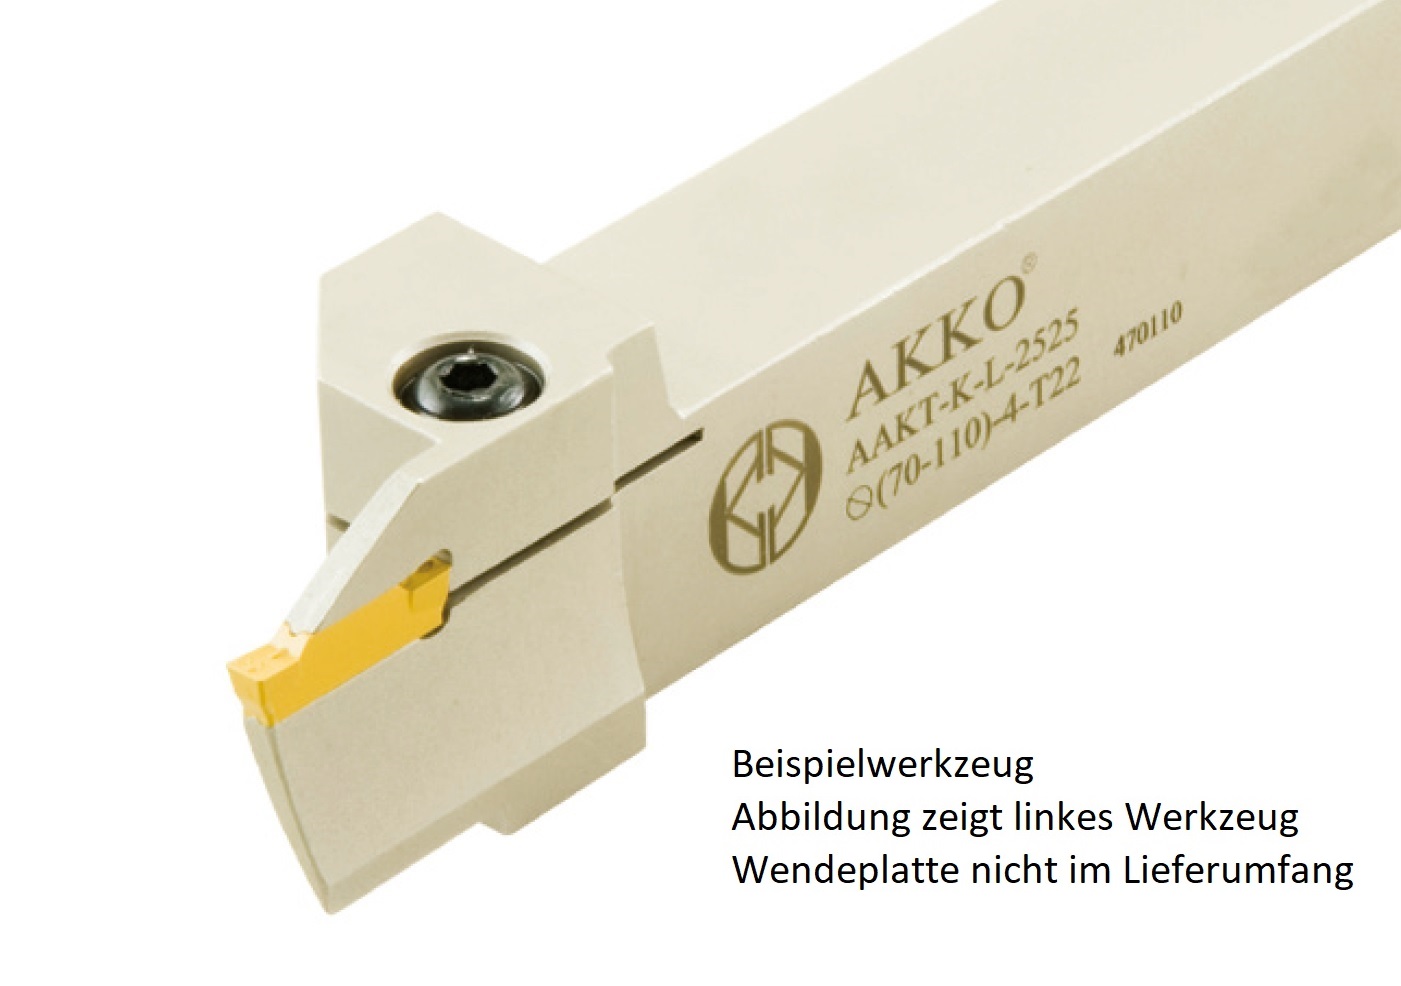 AKKO-Axial-Stechhalter, kompatibel mit Korloy-Stechplatte MGM.-4
Schaft-ø 25x25, Einstechbereich ø 70 - ø 110 mm, rechts